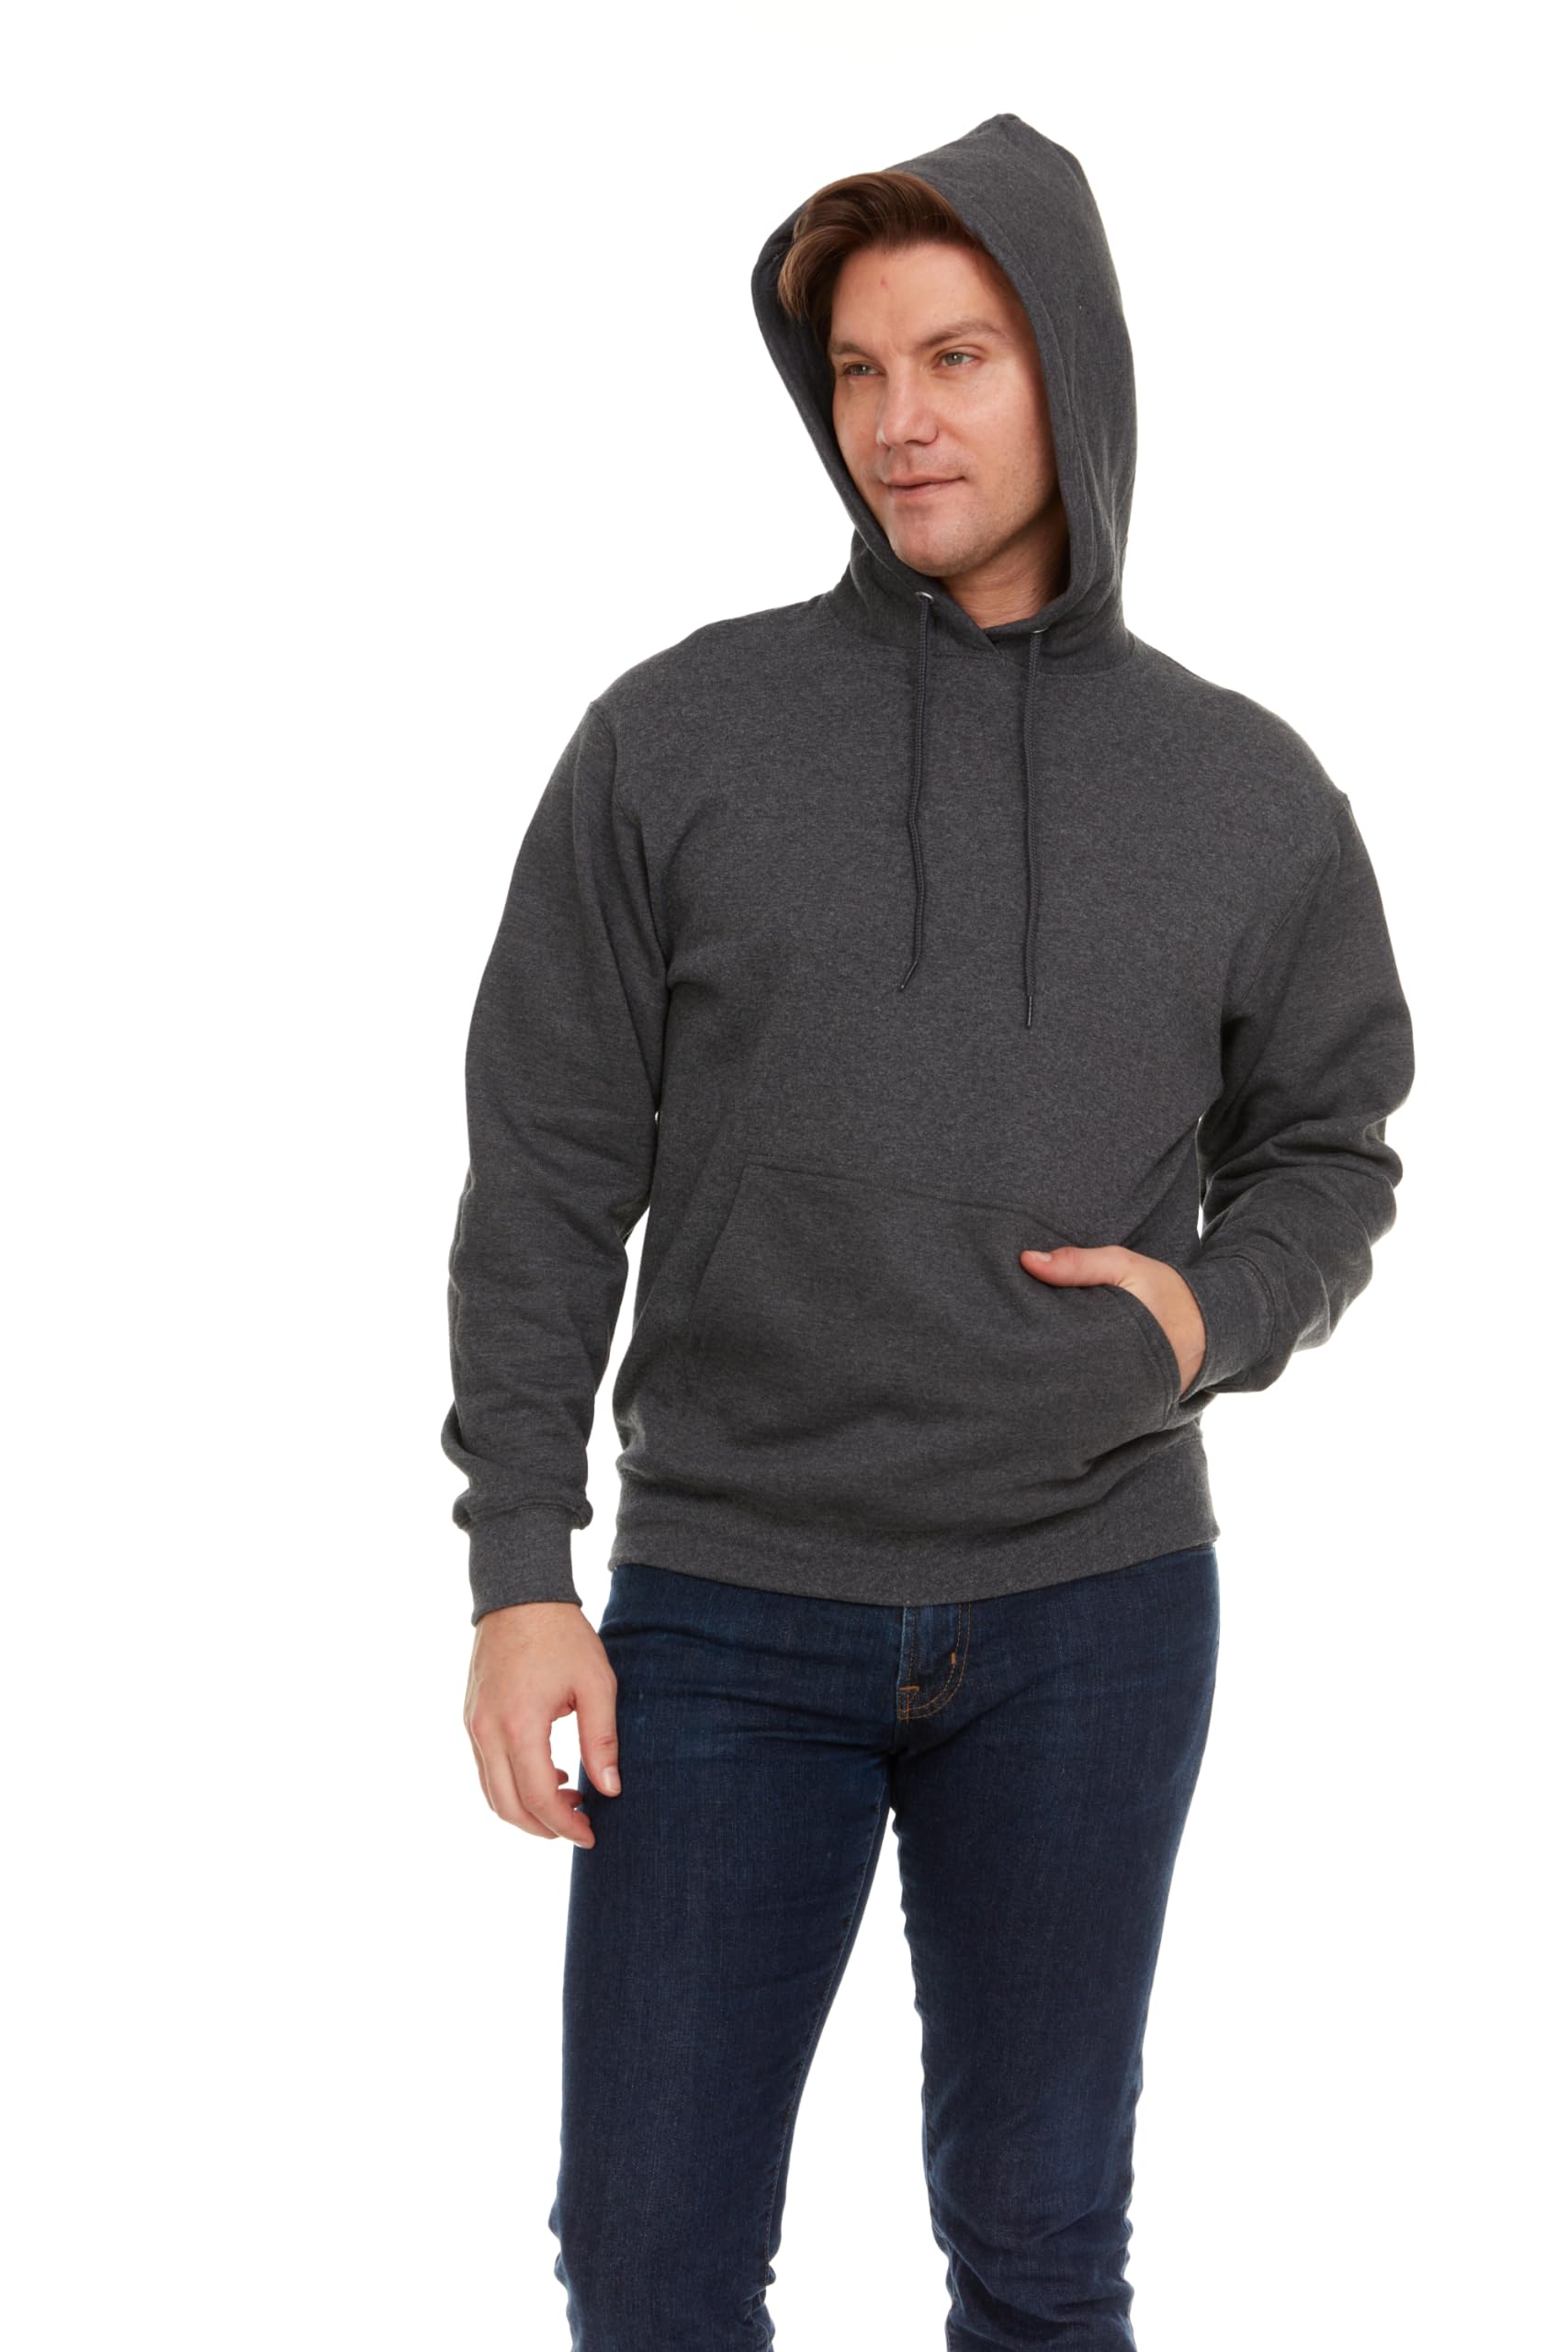 BILLIONHATS Wholesale Hoodie Sweatshirts, Men Women Unisex Hoodies Cotton Blend, Bulk Adults Sweatshirt, Homeless Donation